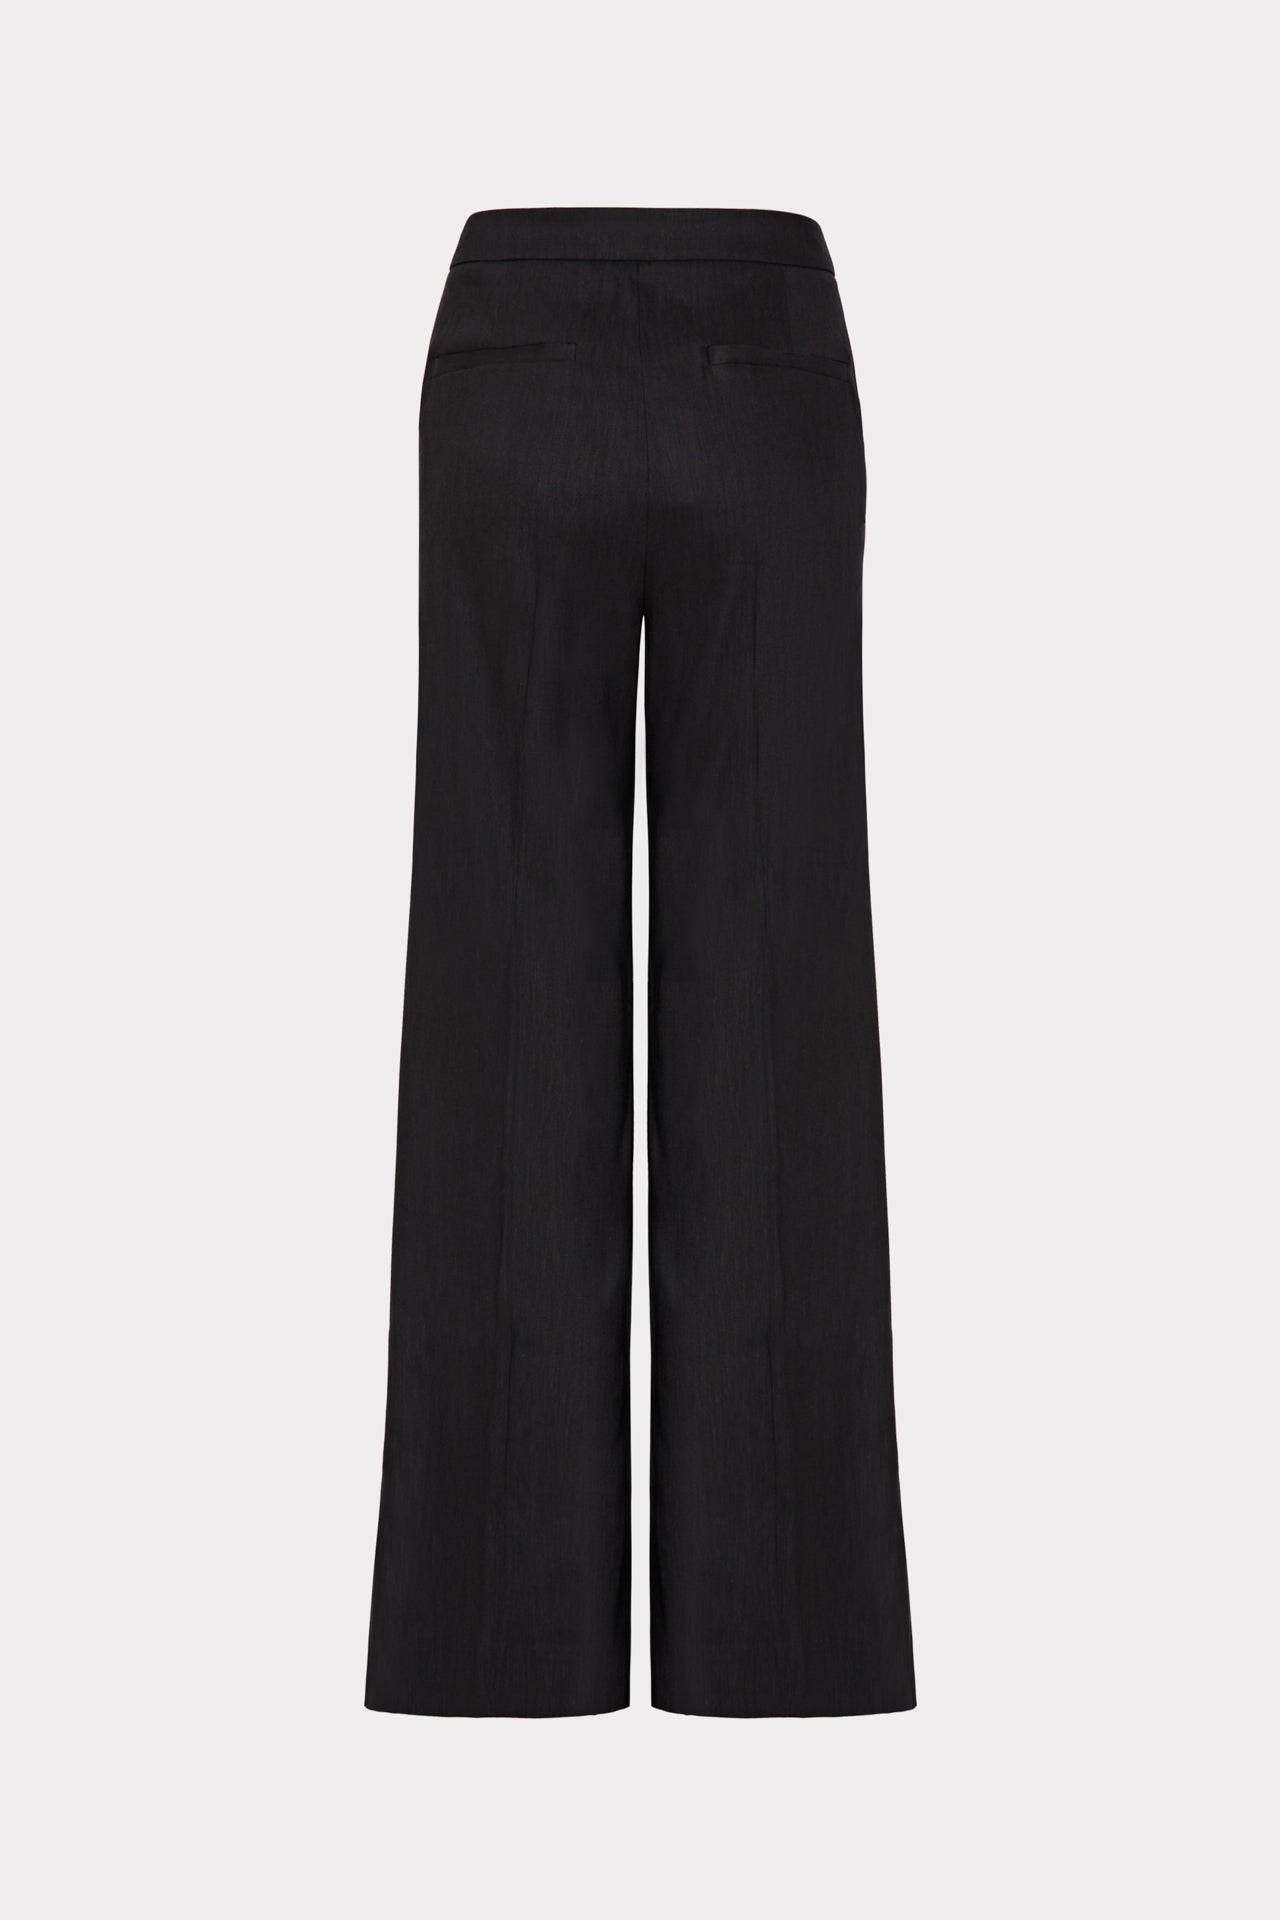 Lennon Linen Pants in Black | MILLY